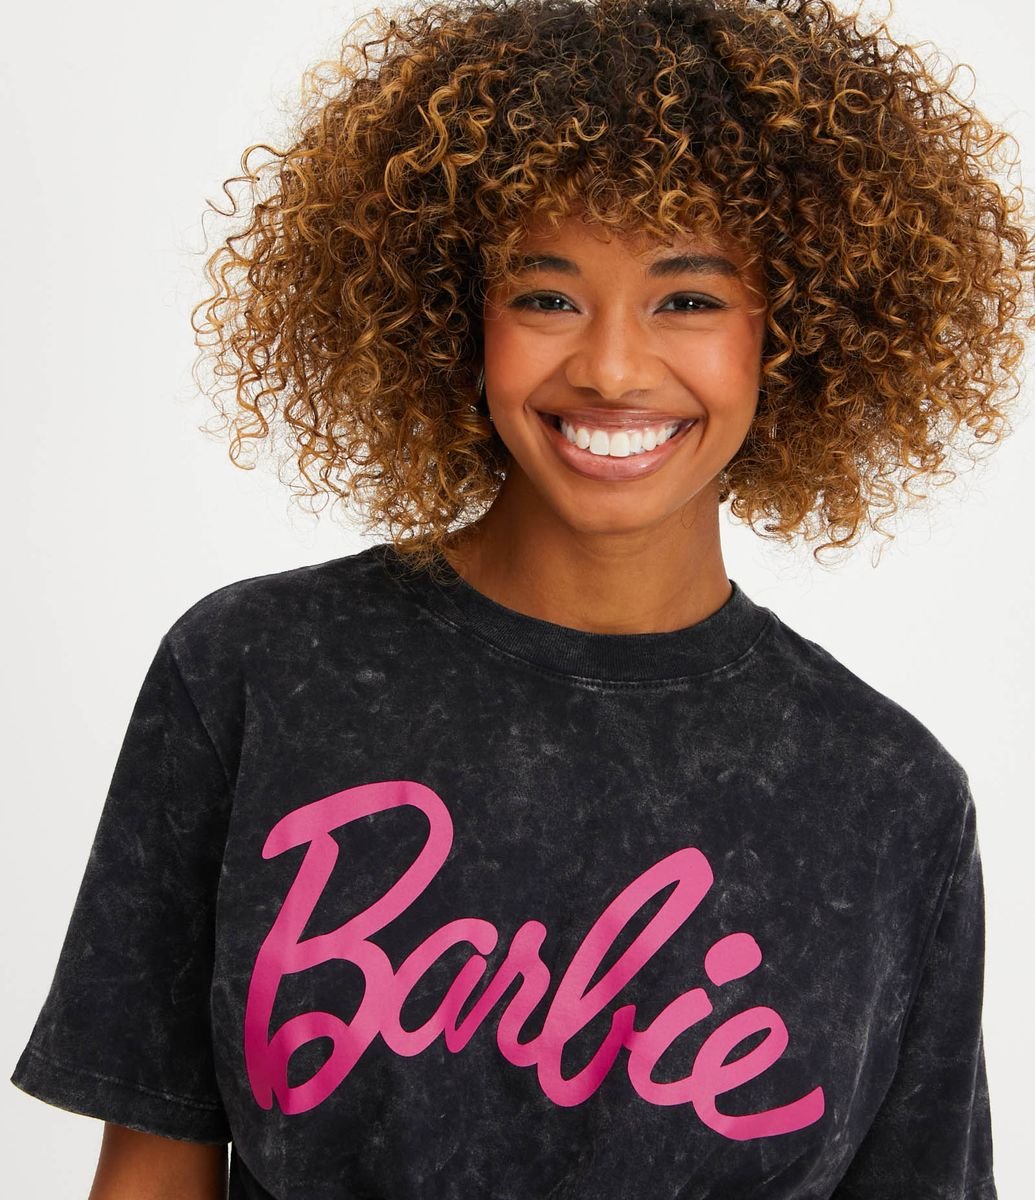 Camiseta Sem Mangas Curta Para Boneca Barbie, Roupas De Boneca